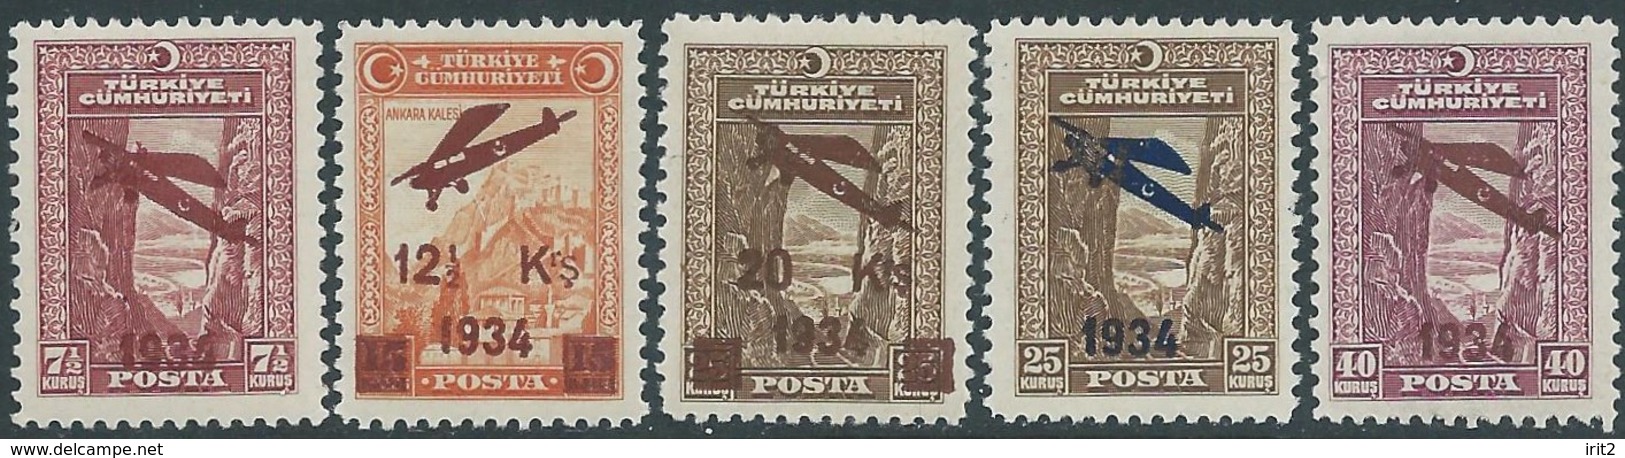 TURCHIA -TURKEY-TURKISH - 1934  Air Mail - 1934-39 Sandschak Alexandrette & Hatay